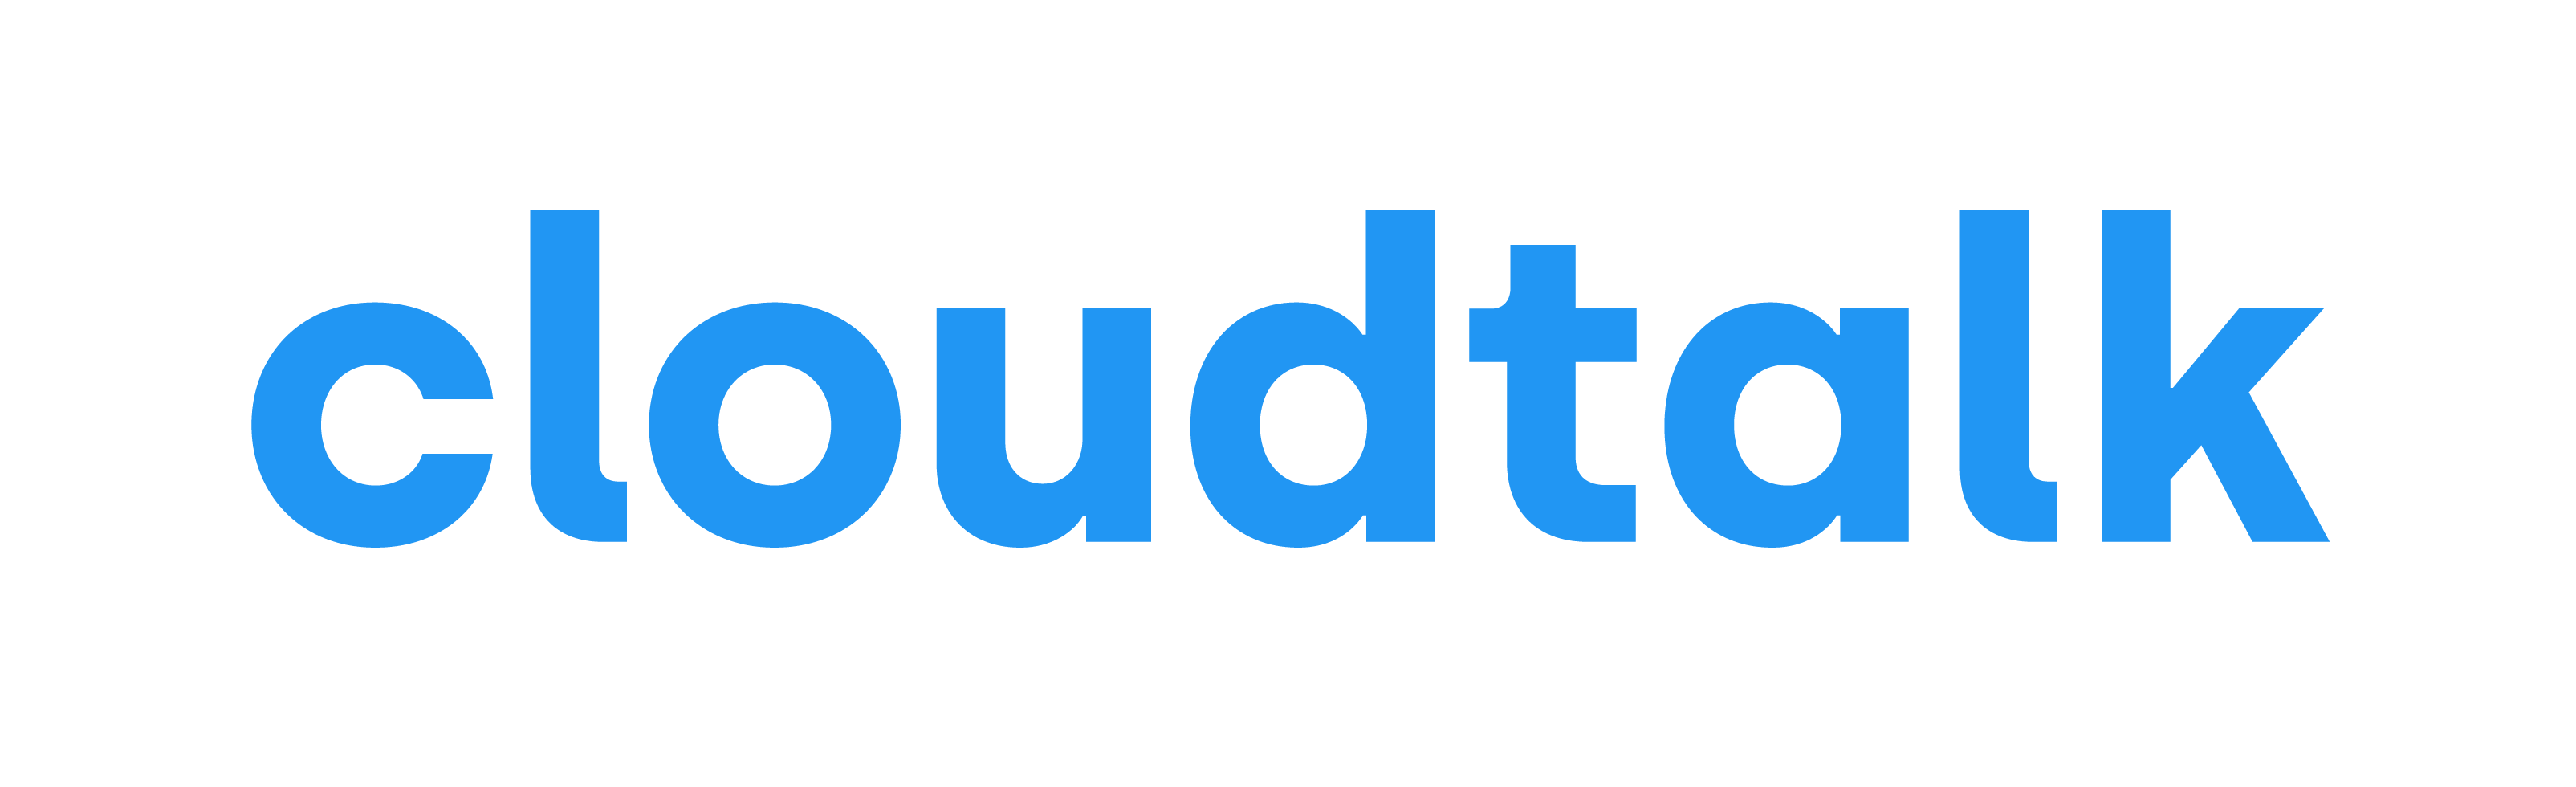 cloud talk logo